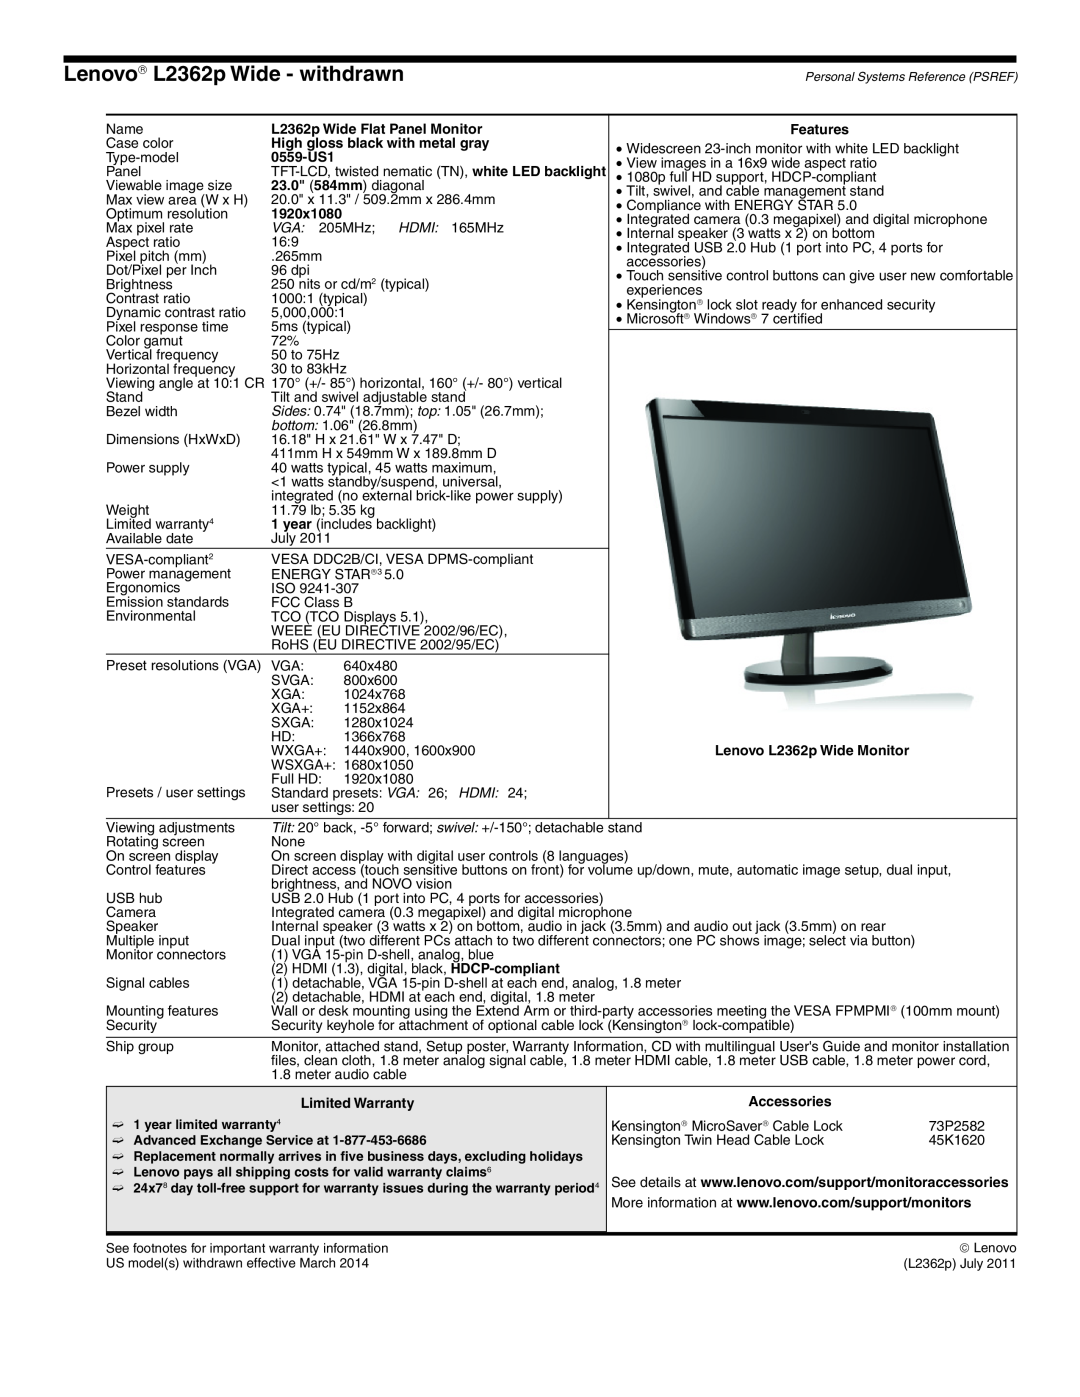 Lenovo L2363D manual Lenovo→ L2362p Wide - withdrawn, VGA 205MHz HDMI, Hdmi 